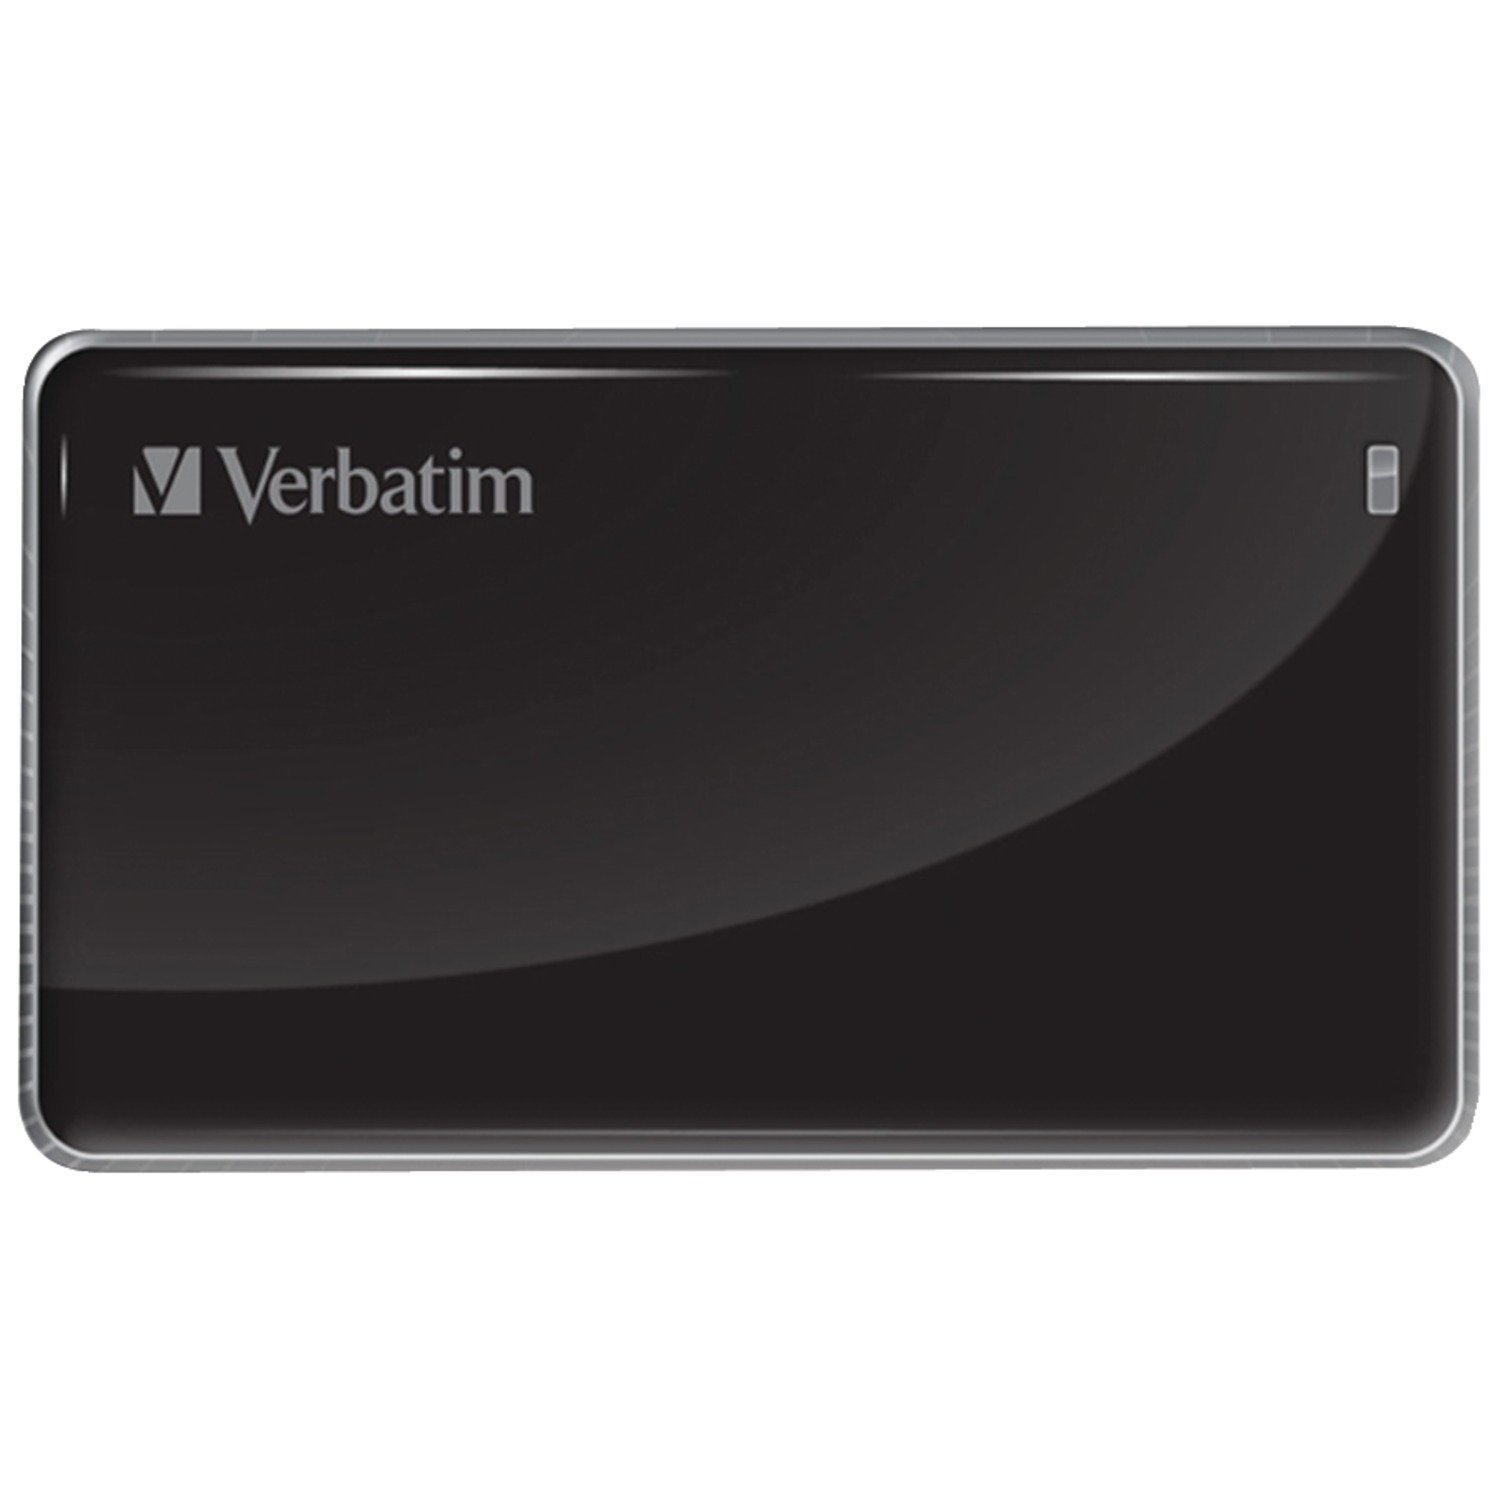 Verbatim威宝 Store 'n' Go 128 GB USB 3.0 外接固态硬盘 $119.99免运费